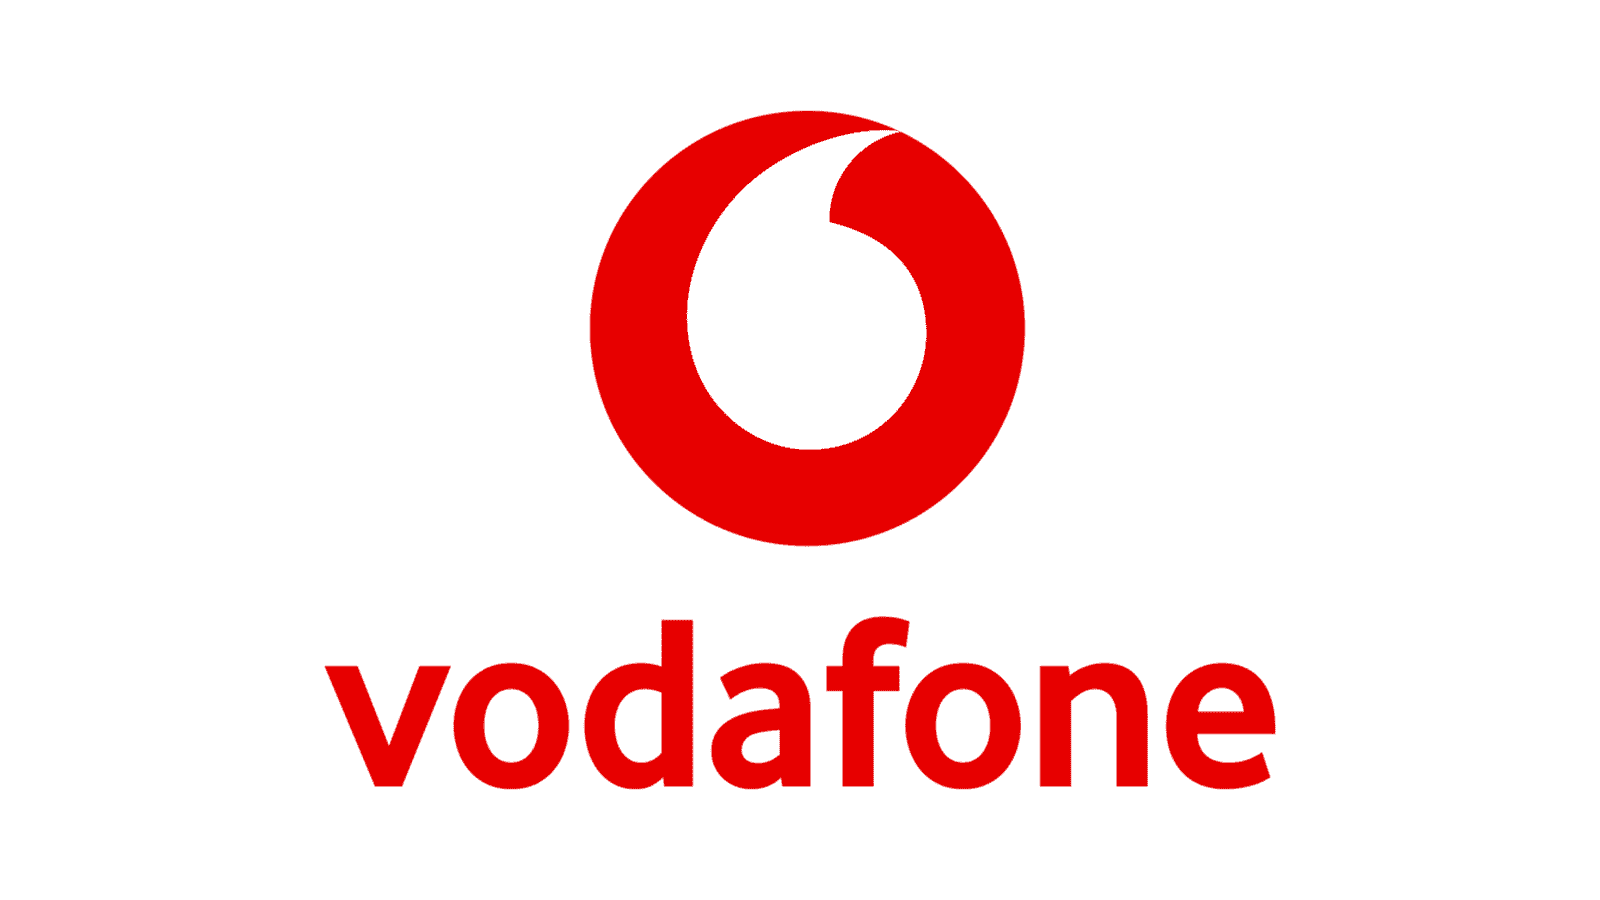 vodafone logo on a white background